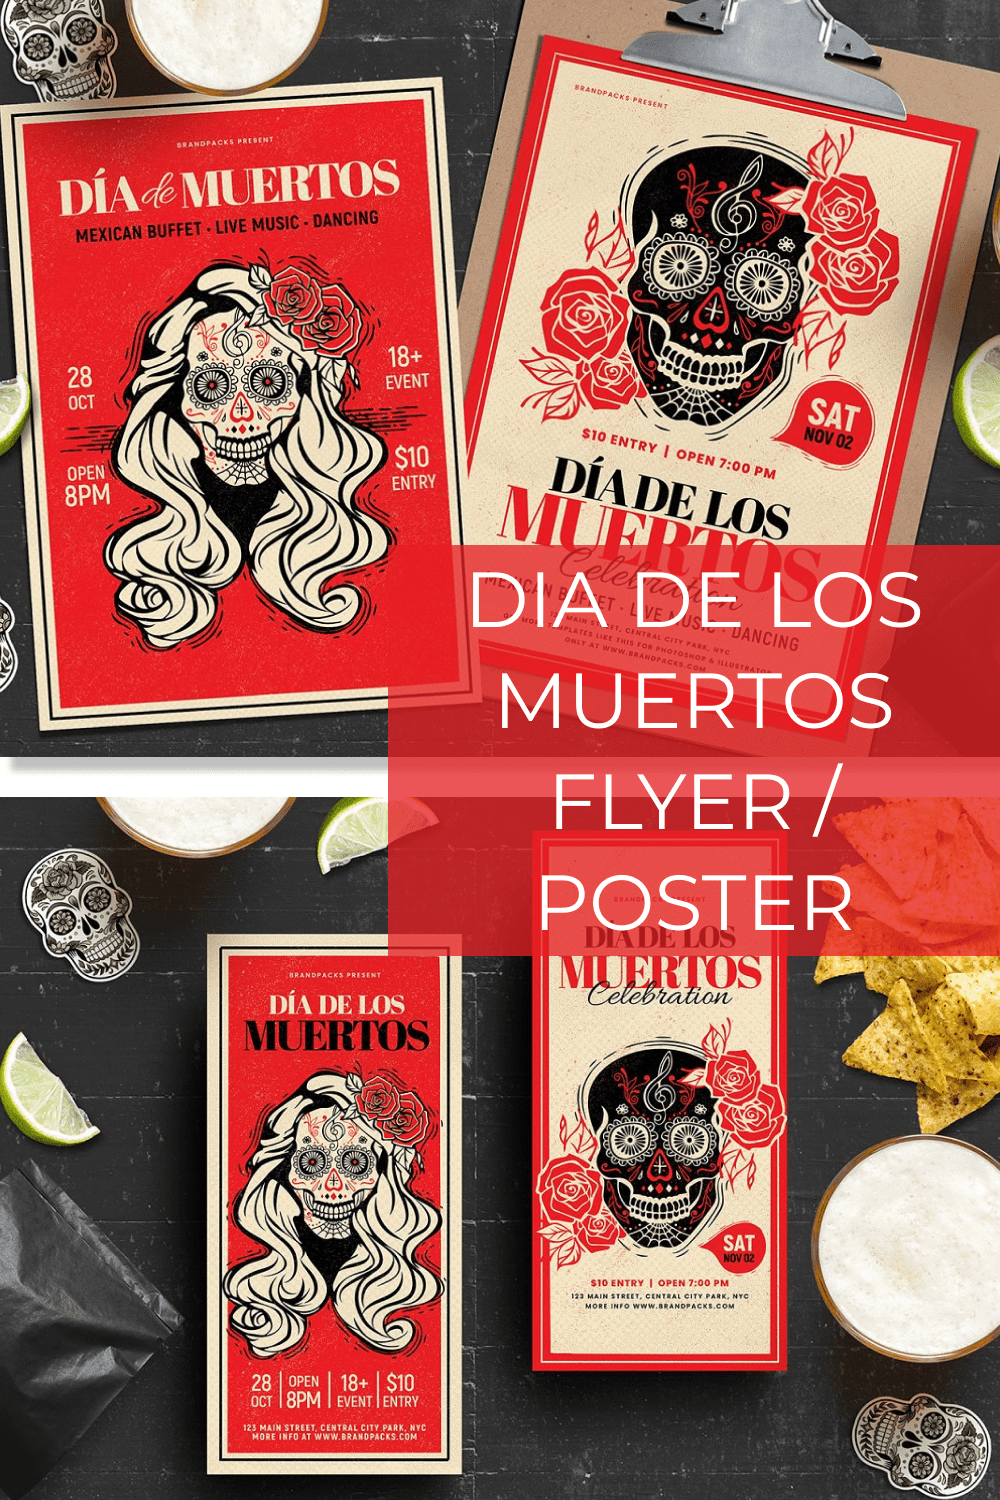 Dia de los Muertos Flyer Poster pinterest image.